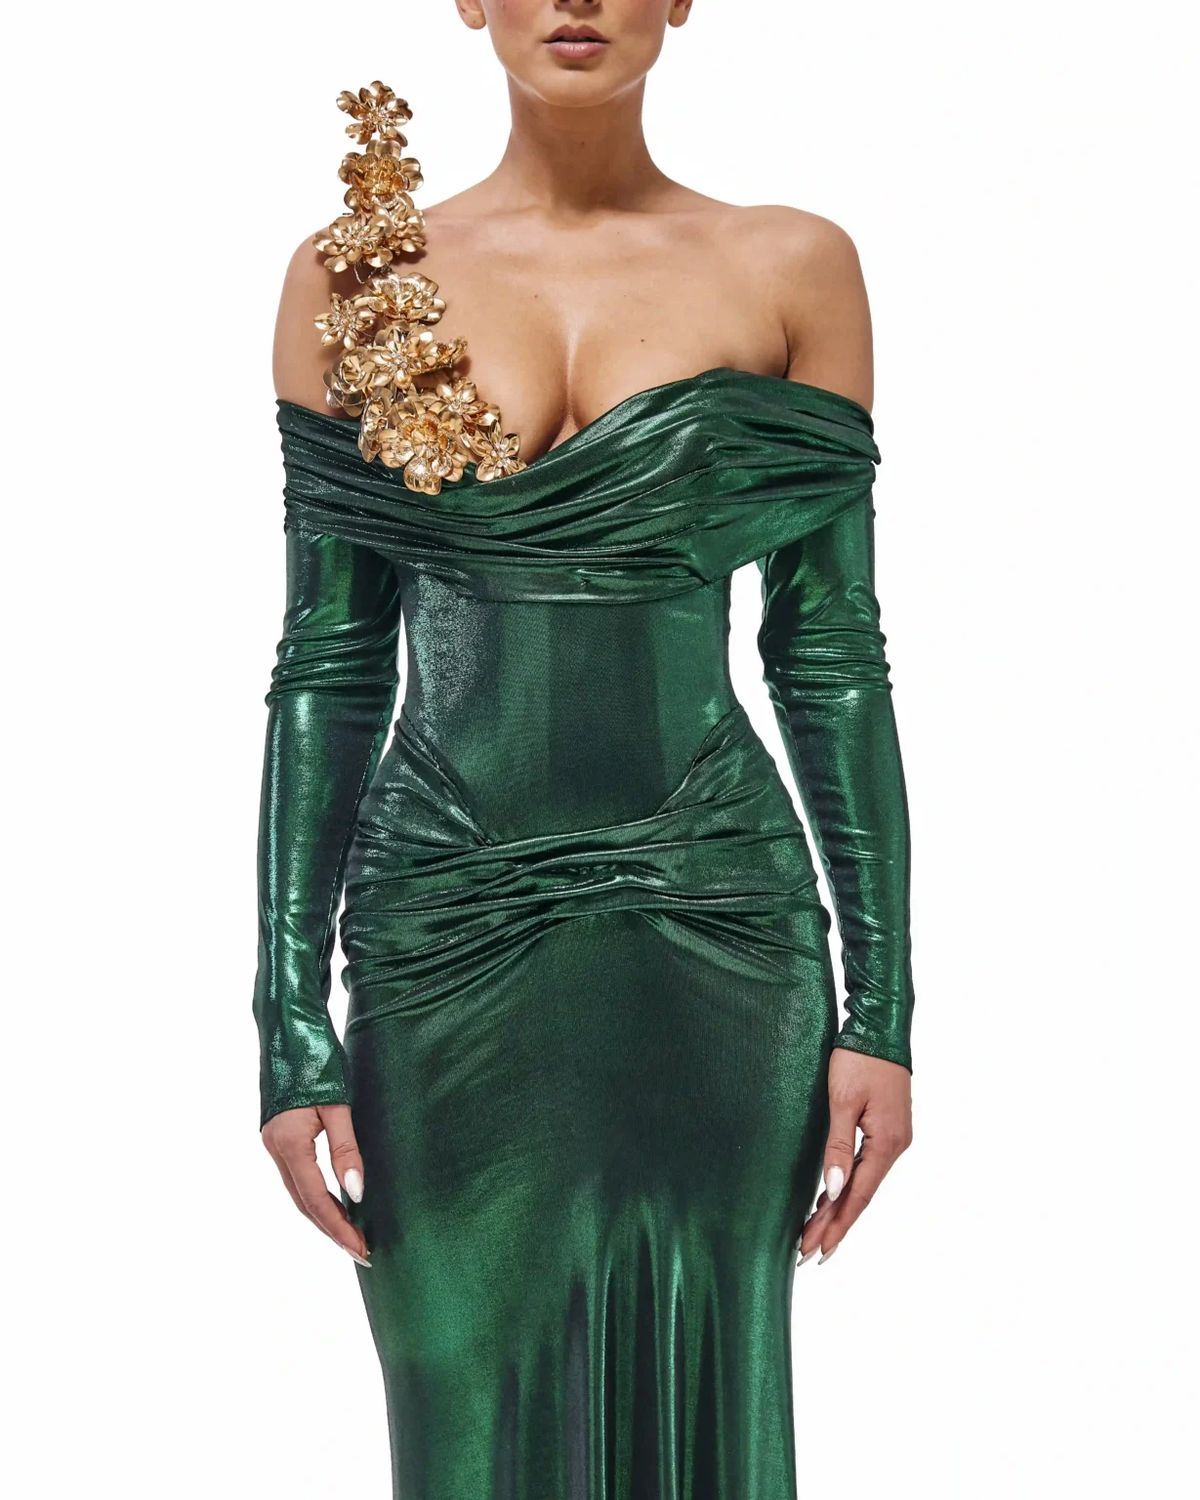 Style metallic-majesty-24-25 Valdrin Sahiti Size S Pageant Green Mermaid Dress on Queenly